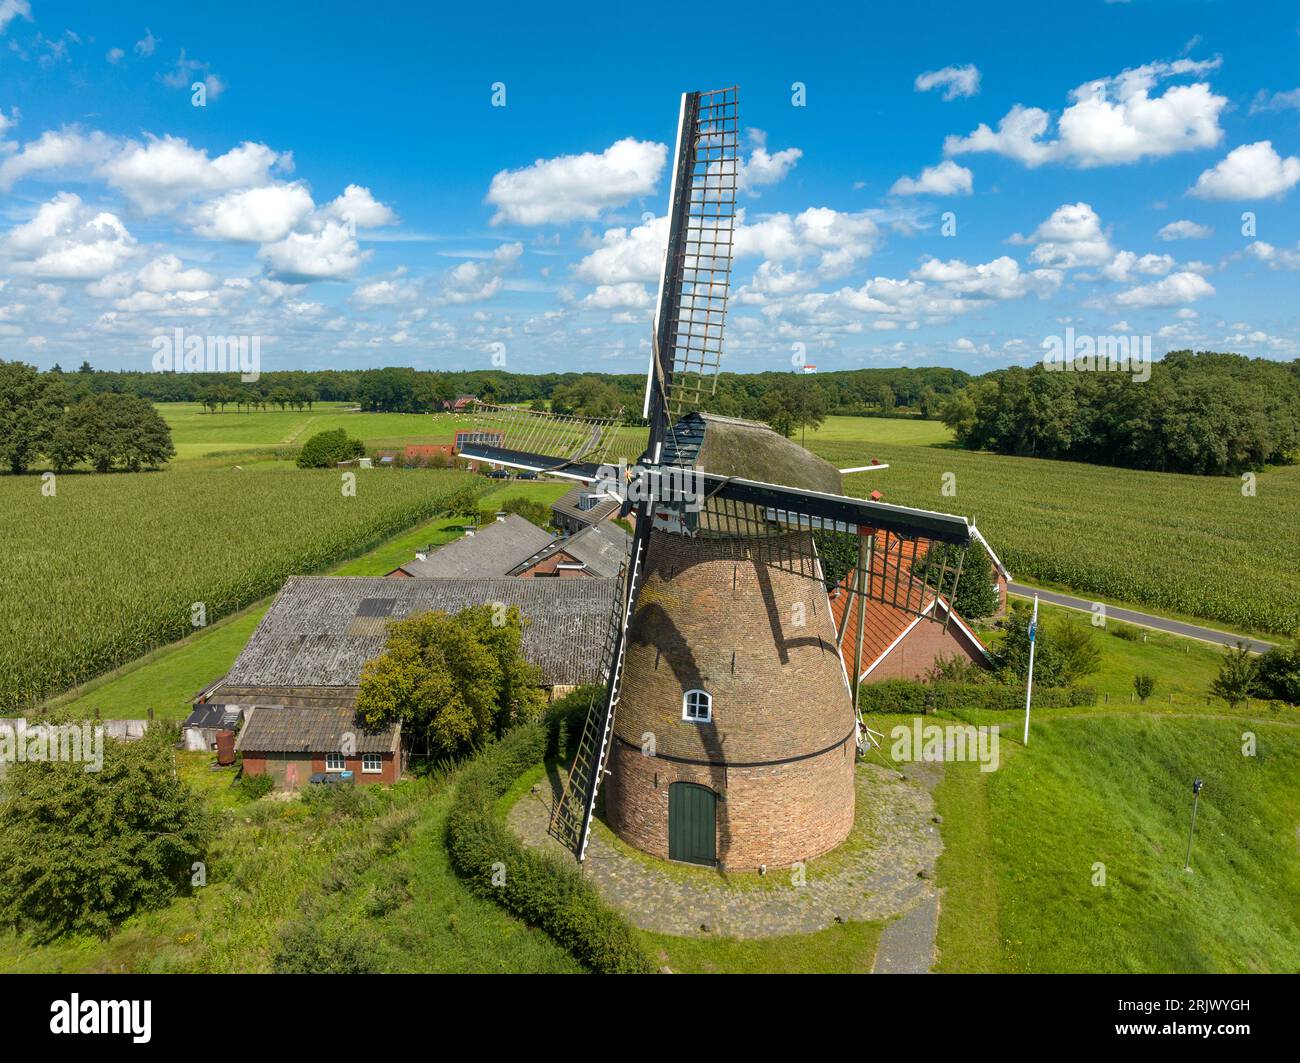 Windmühle genannt Grobbemill in Fleringen, Niederlande Stockfoto